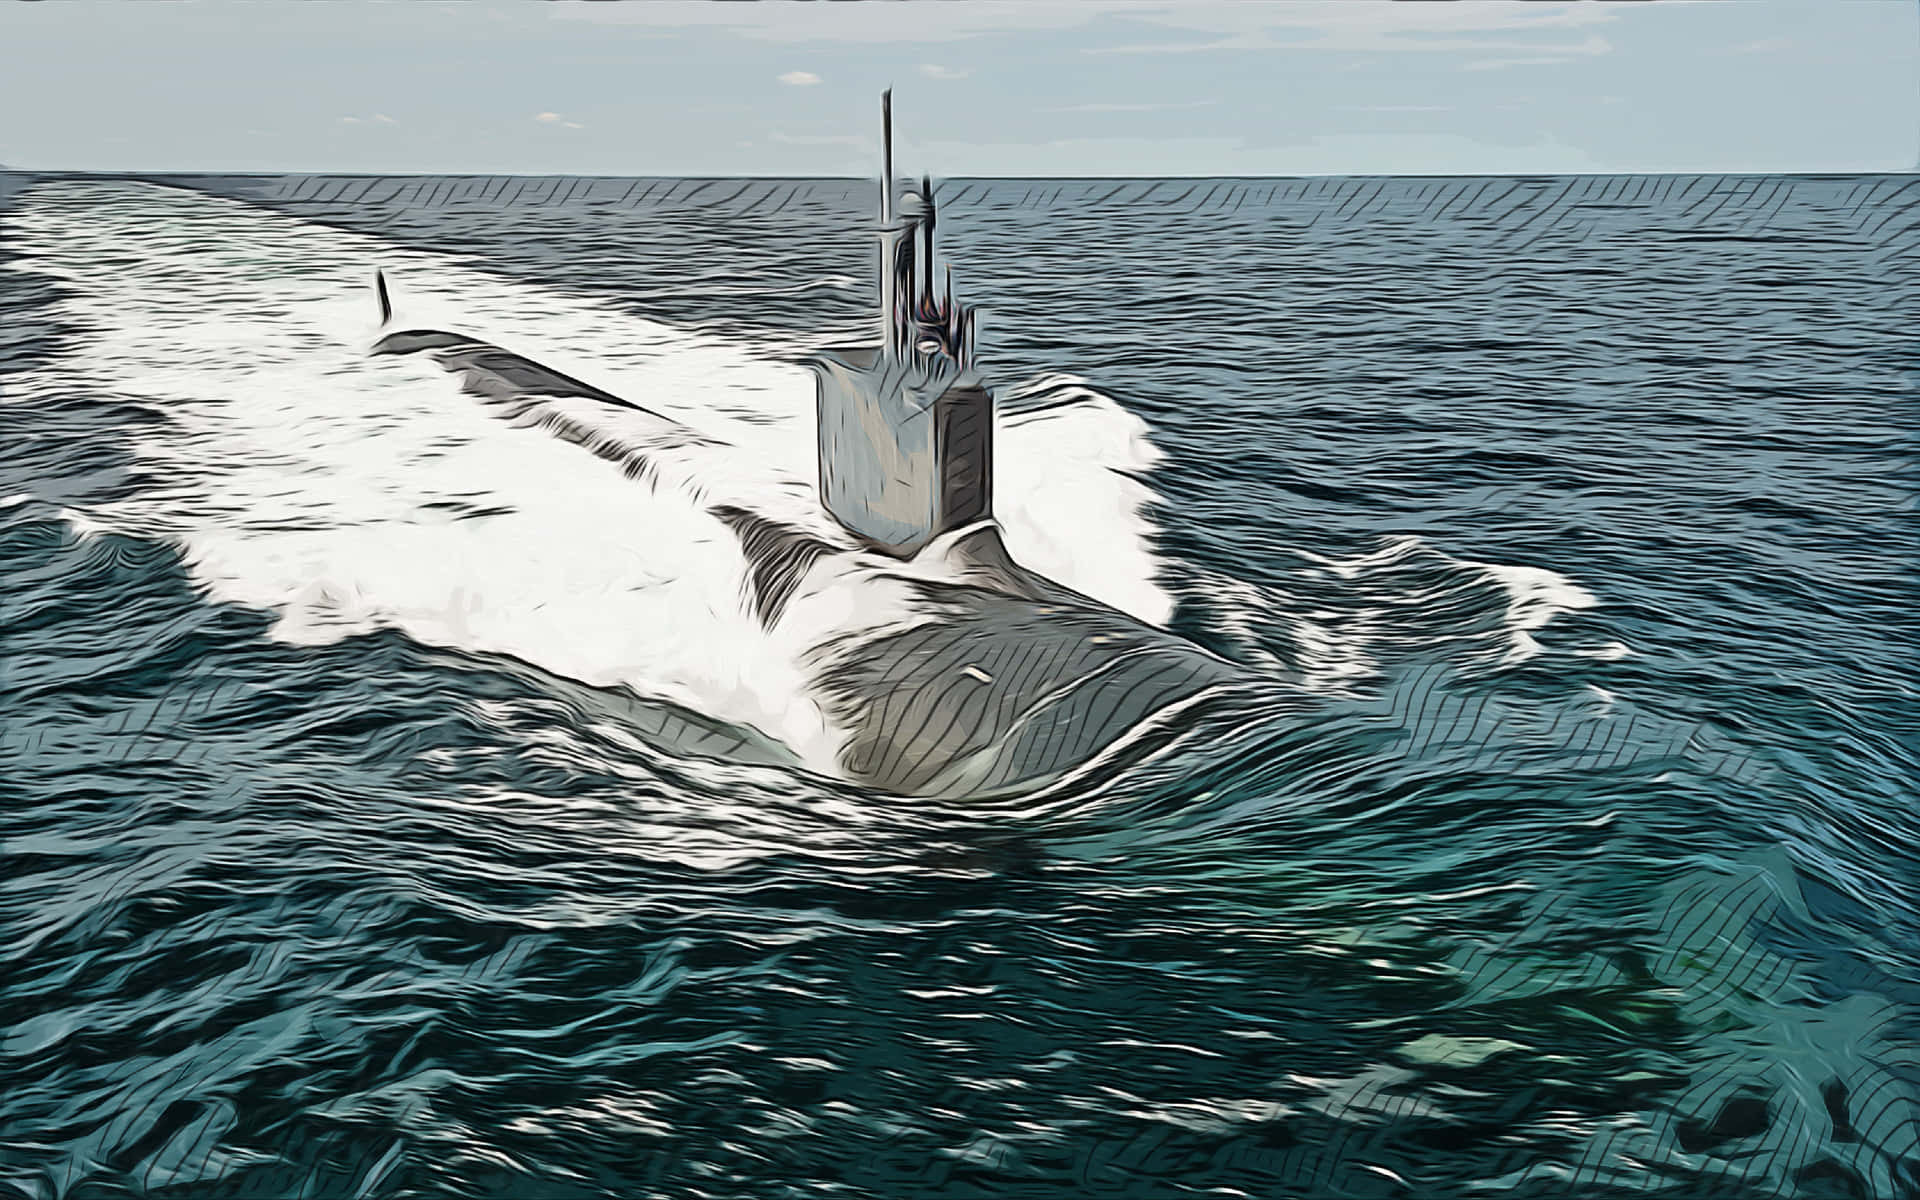 Virginia-class Submarine Wallpaper